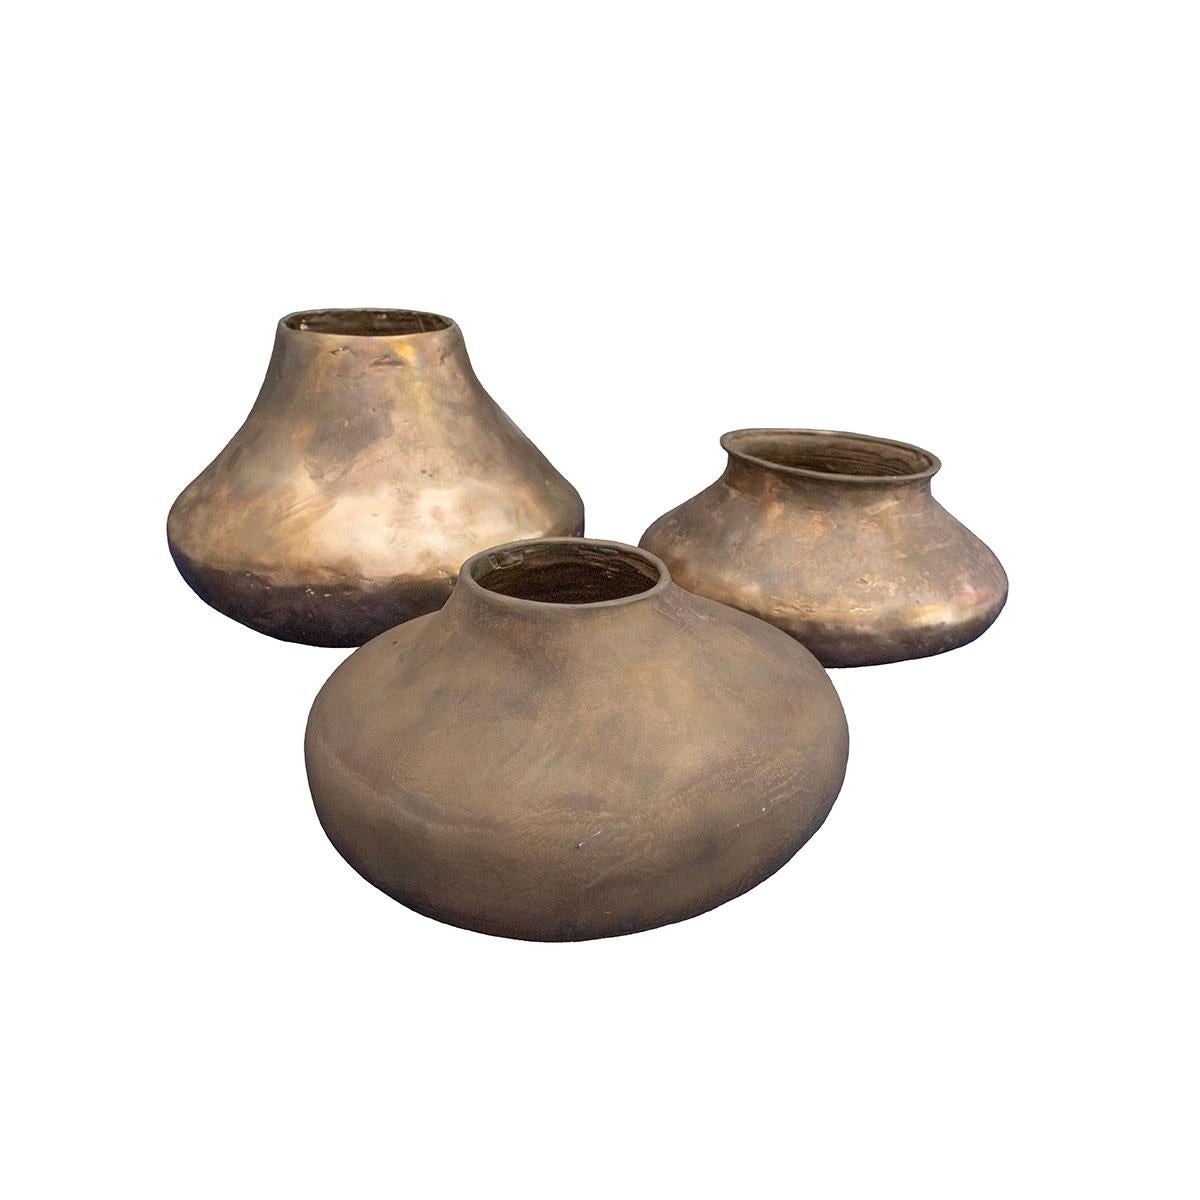 Cast bronze vessel

6” x 9” x 9”